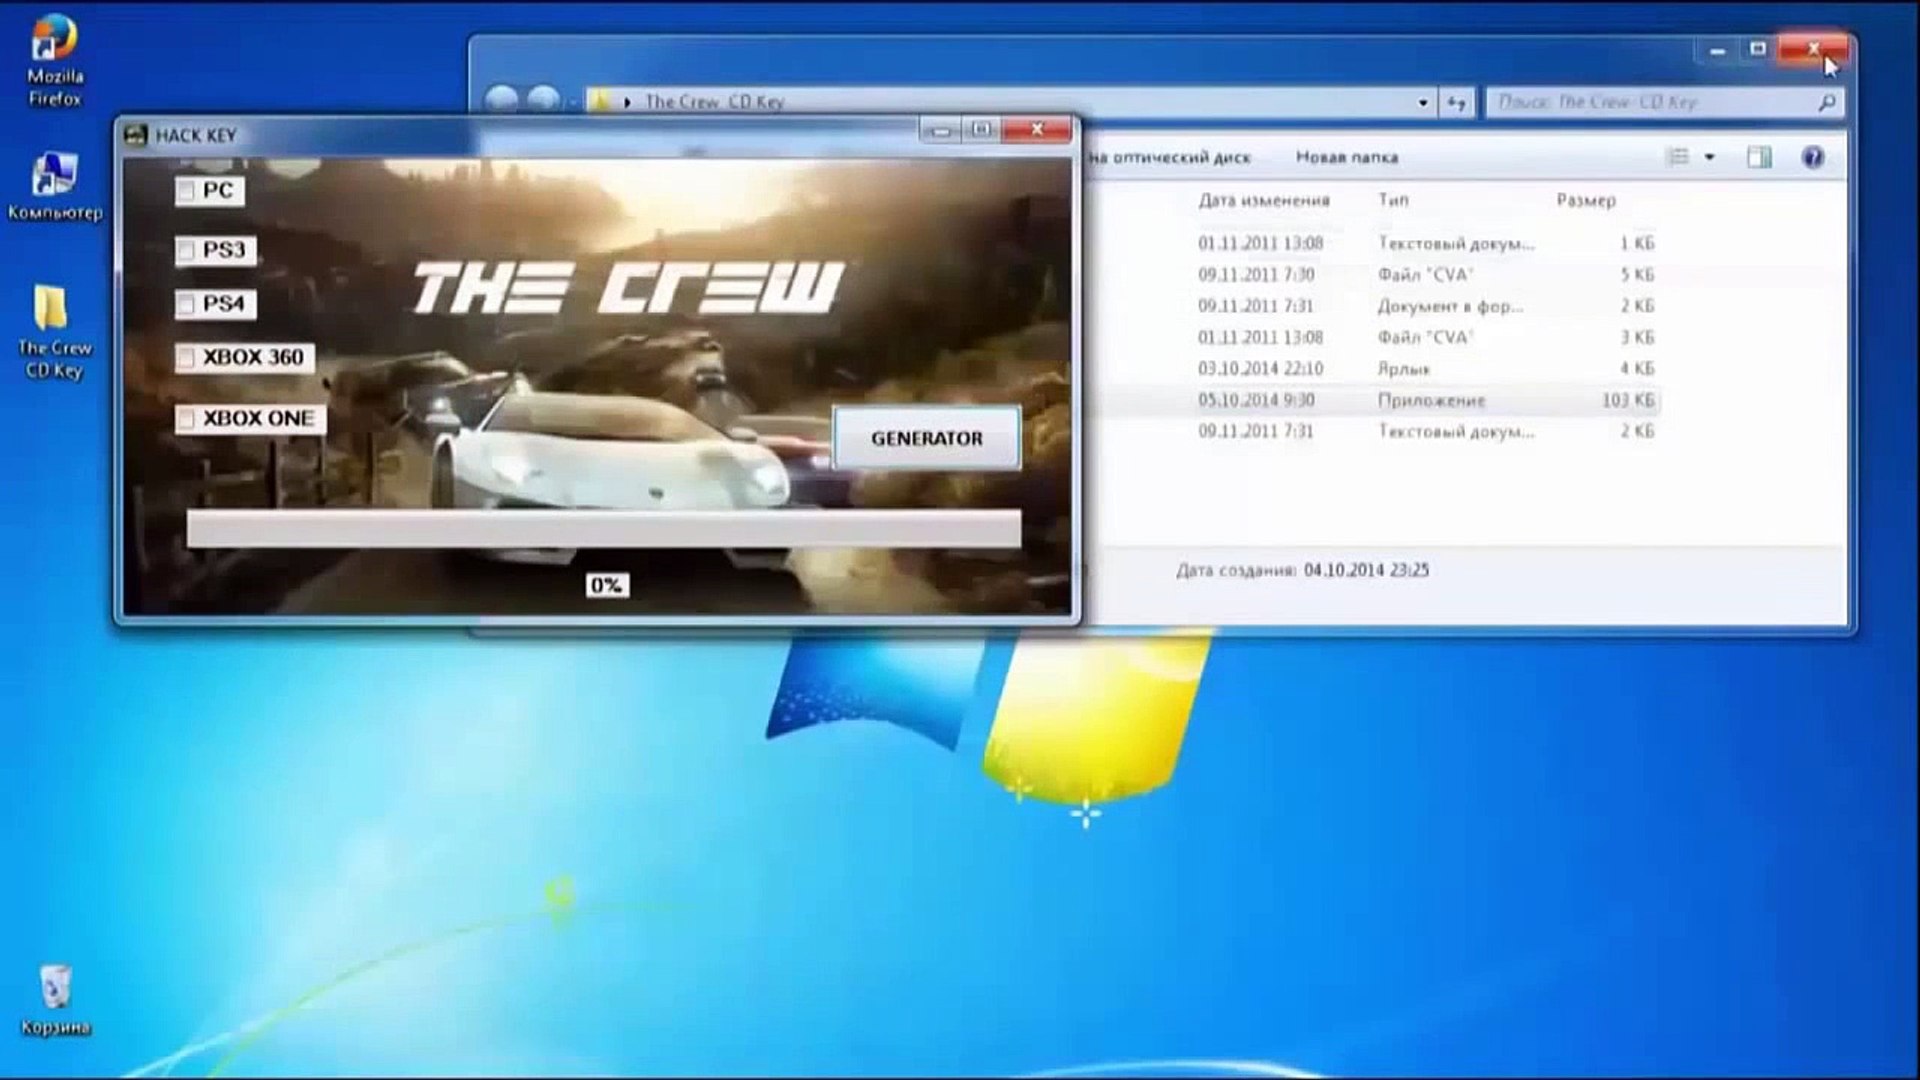 The Crew - CD Key Generator - Updated - video Dailymotion